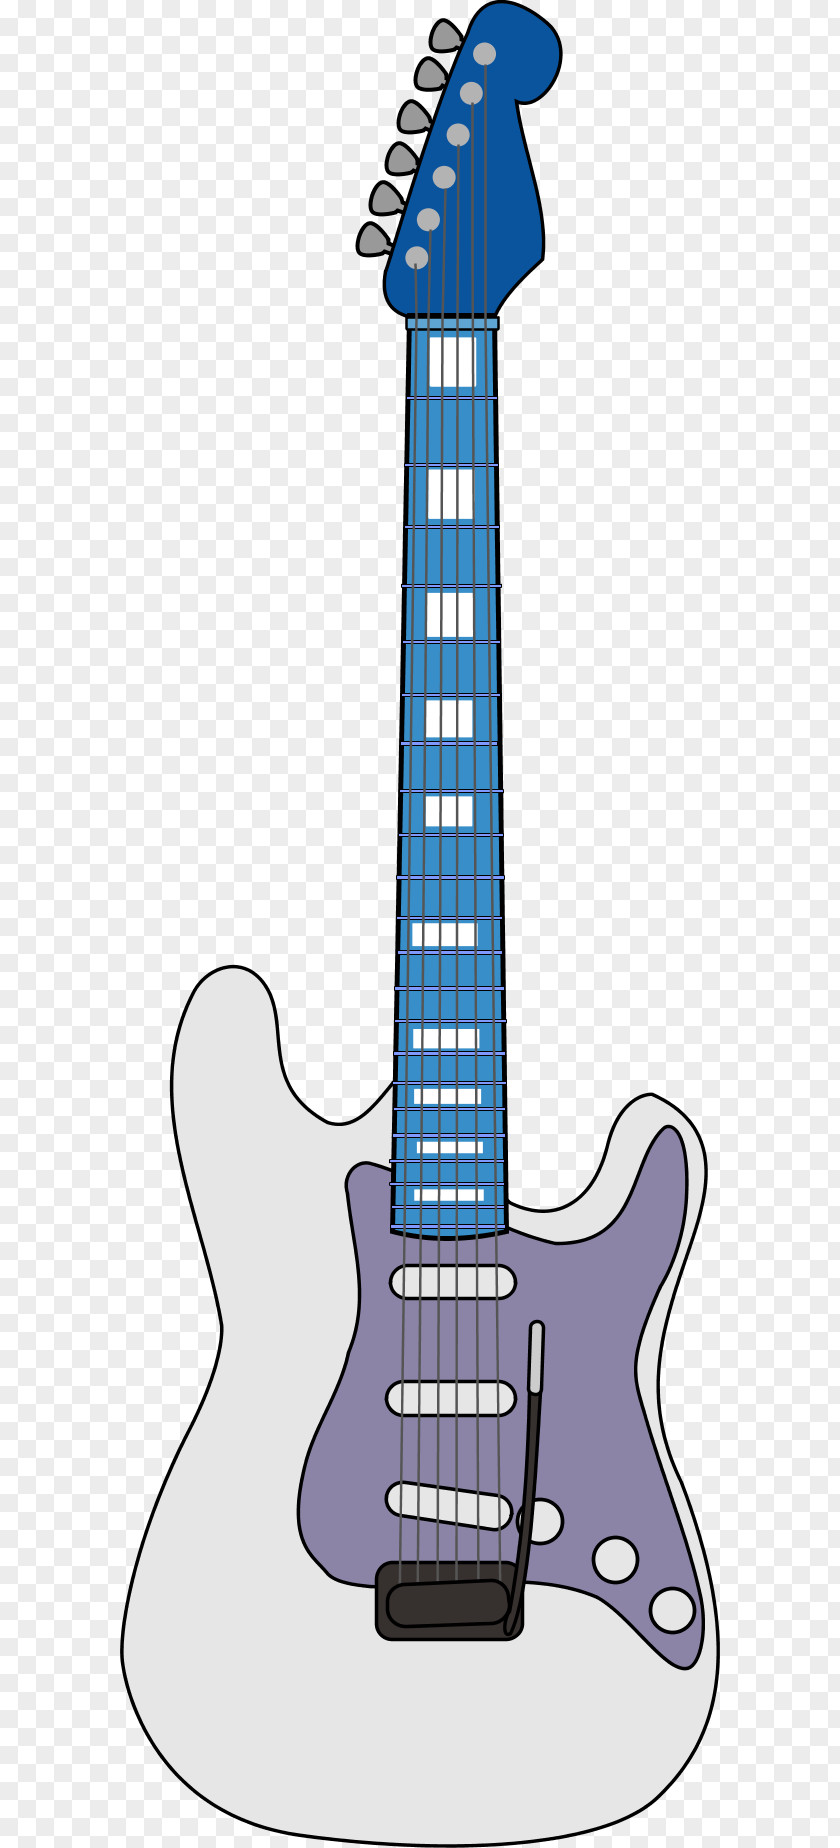 Electric Guitar Fender Stratocaster Clip Art PNG